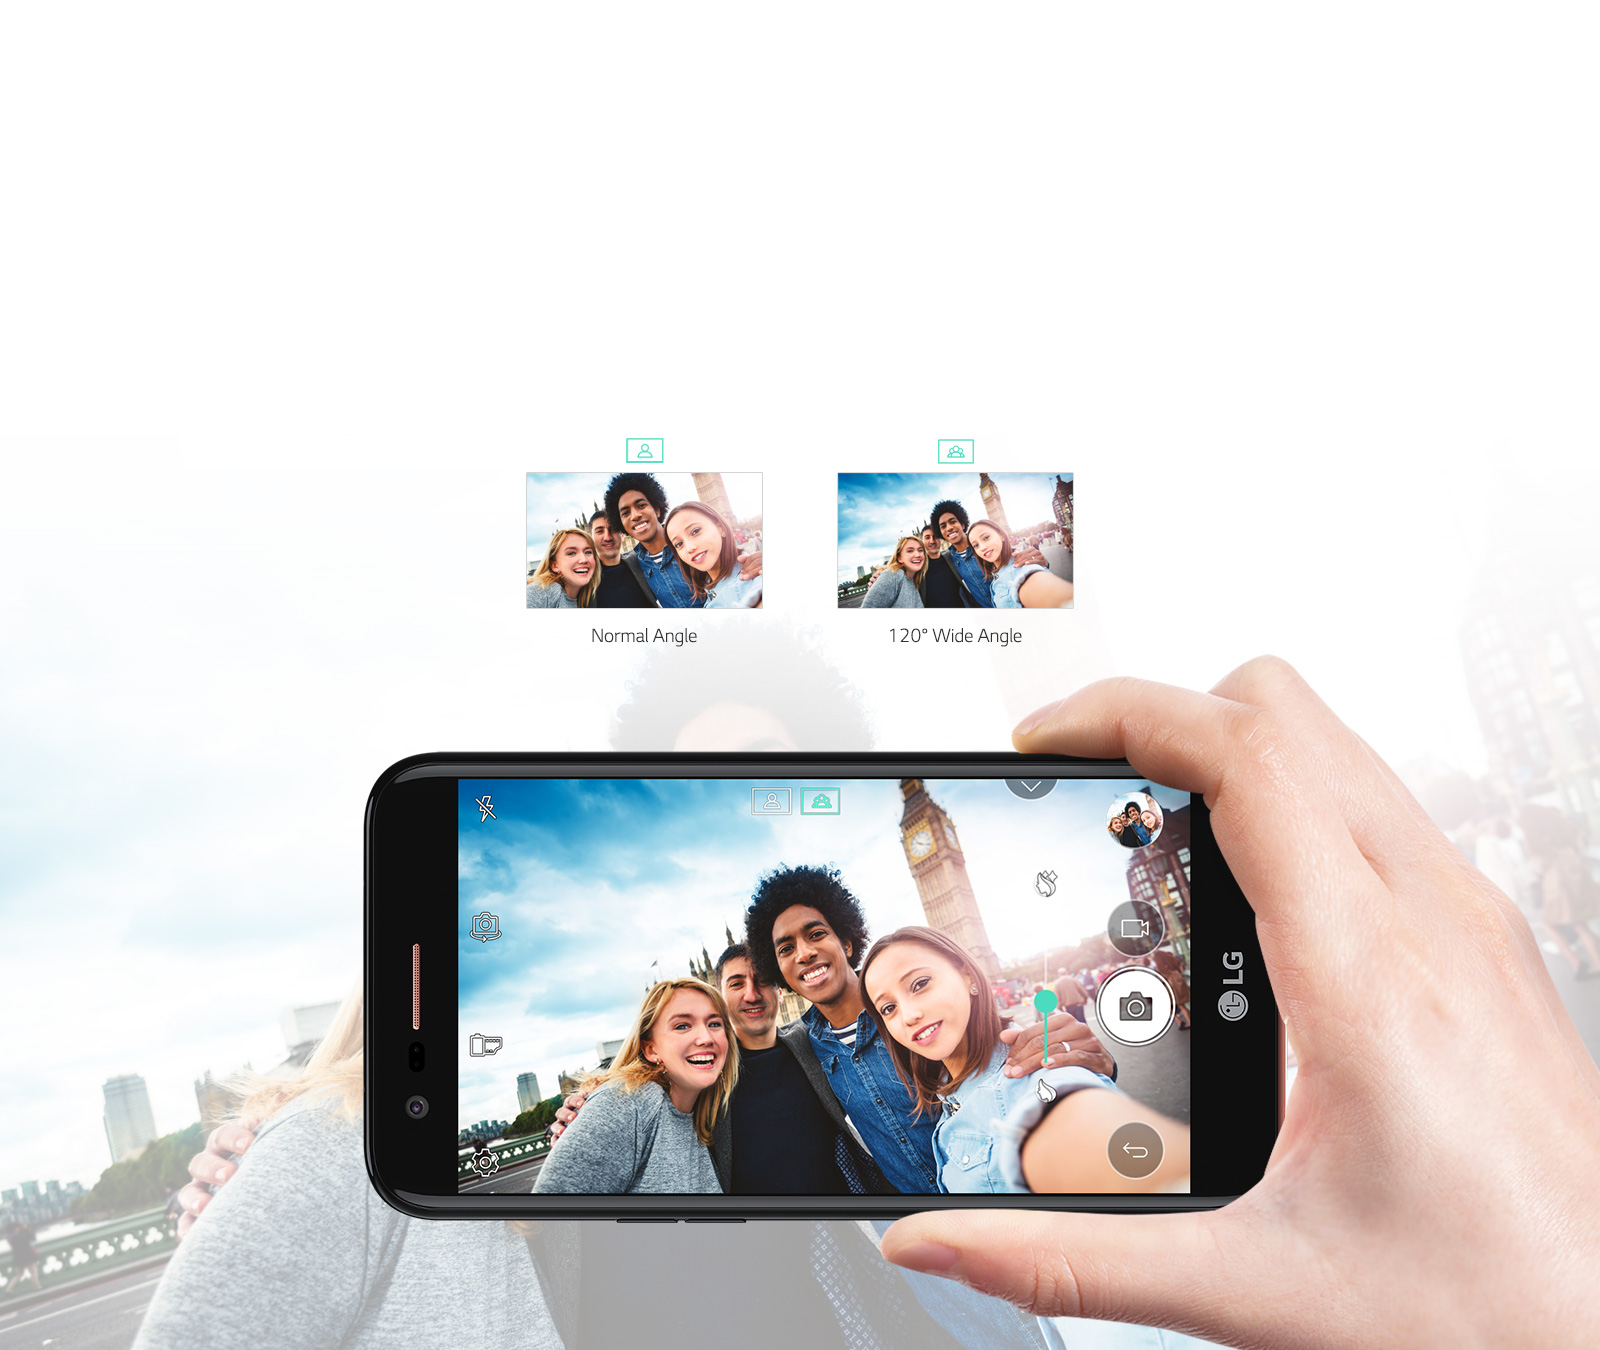 Portréty či skupinové fotky? Širokoúhlá selfie kamera LG K10 2017 zvládne vše.